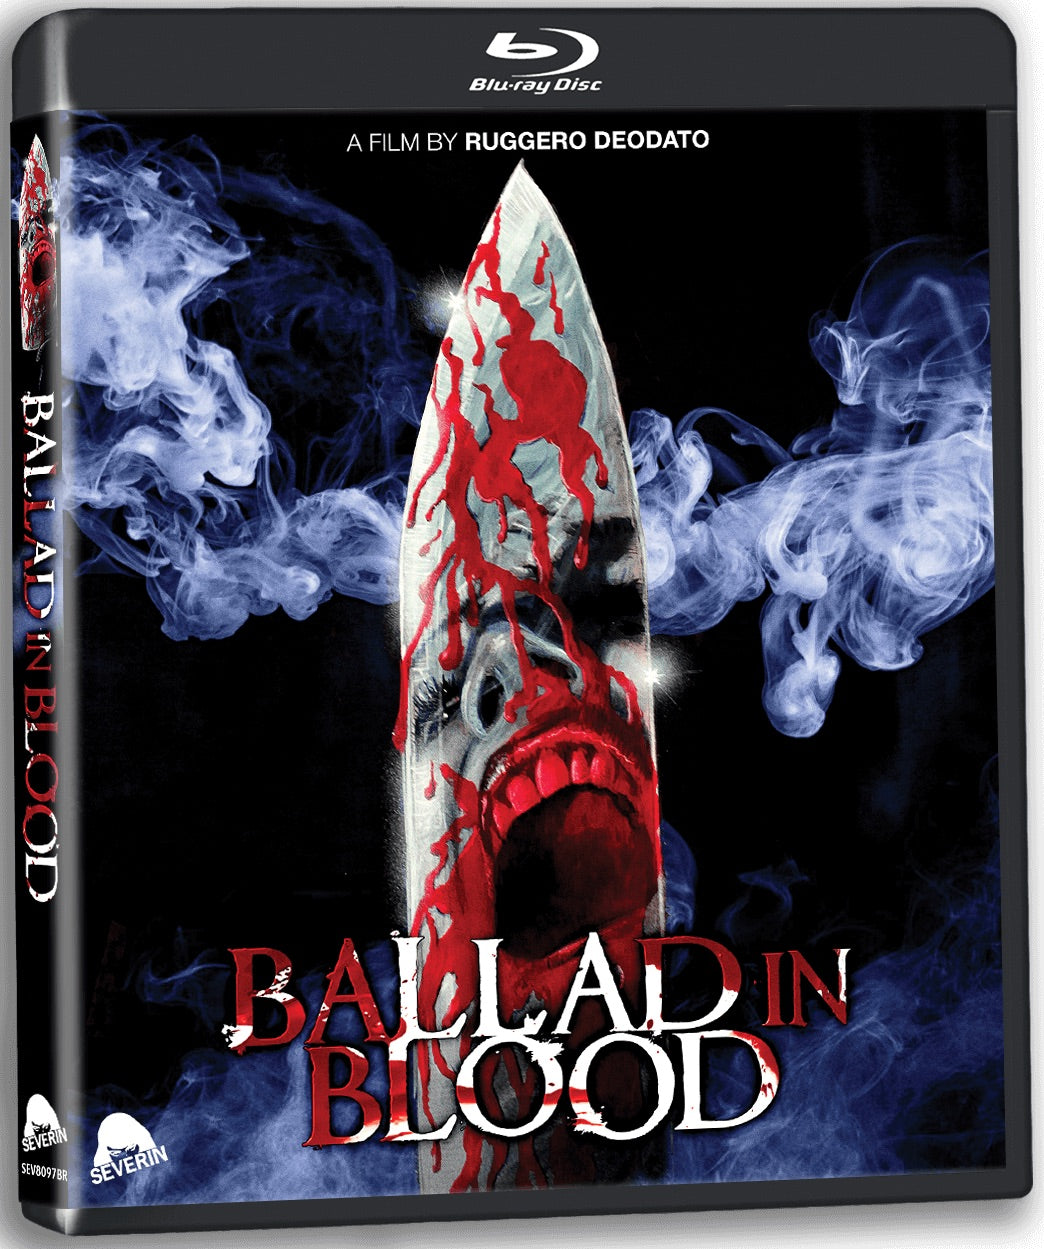 Ballad in Blood [Blu-ray w/Slipcover]